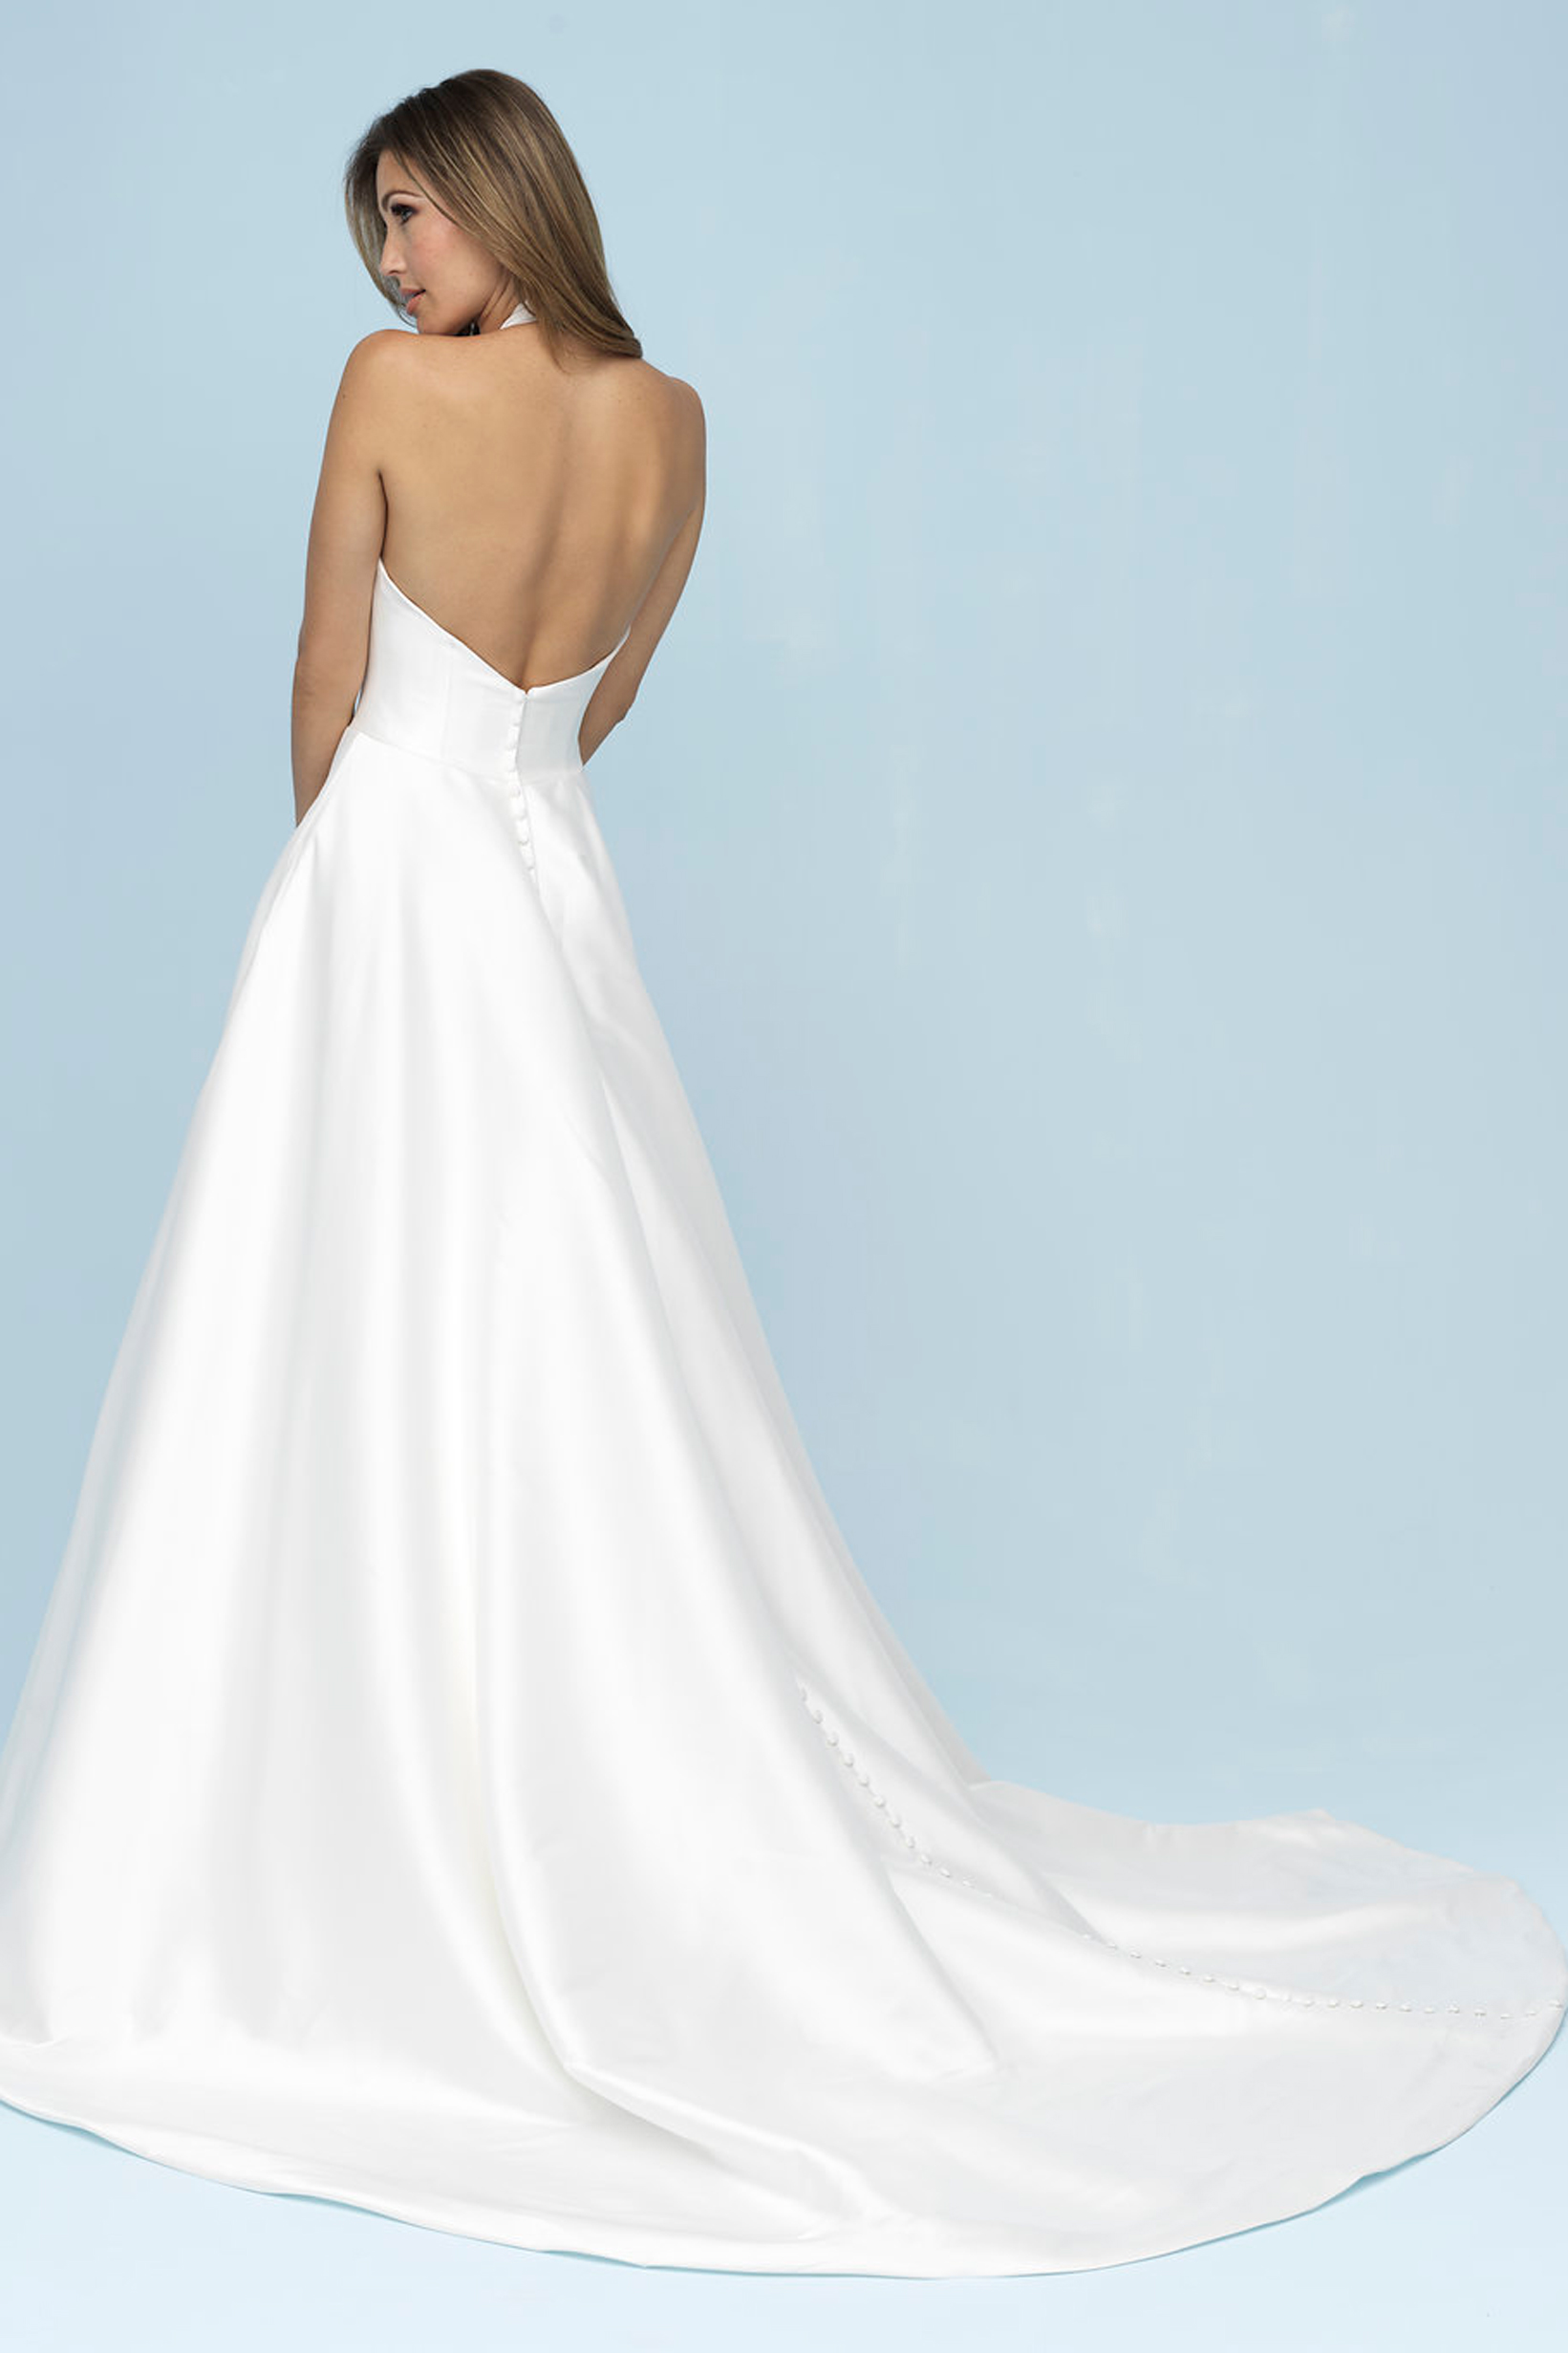 9617 Allure Bridals Bridal Gown